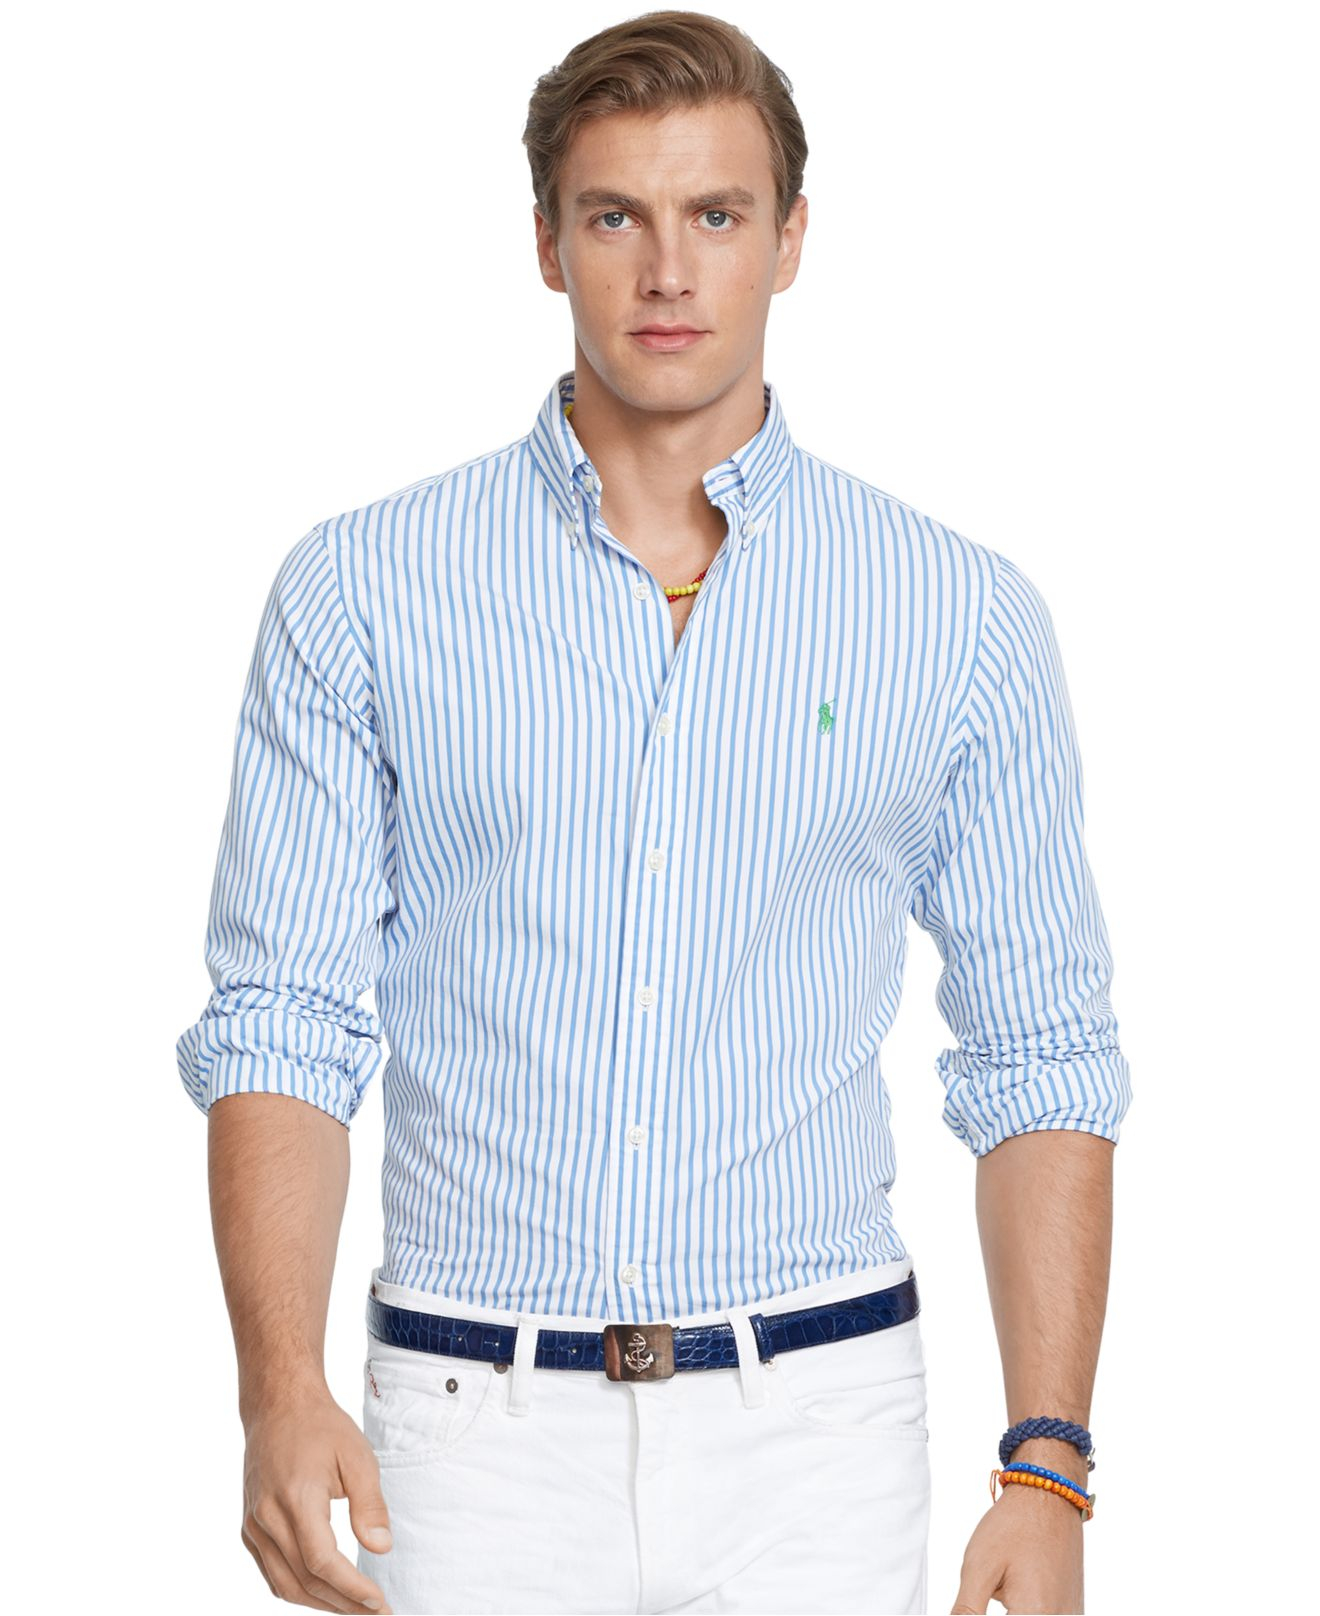 Lyst - Polo Ralph Lauren Striped Poplin Shirt in Blue for Men